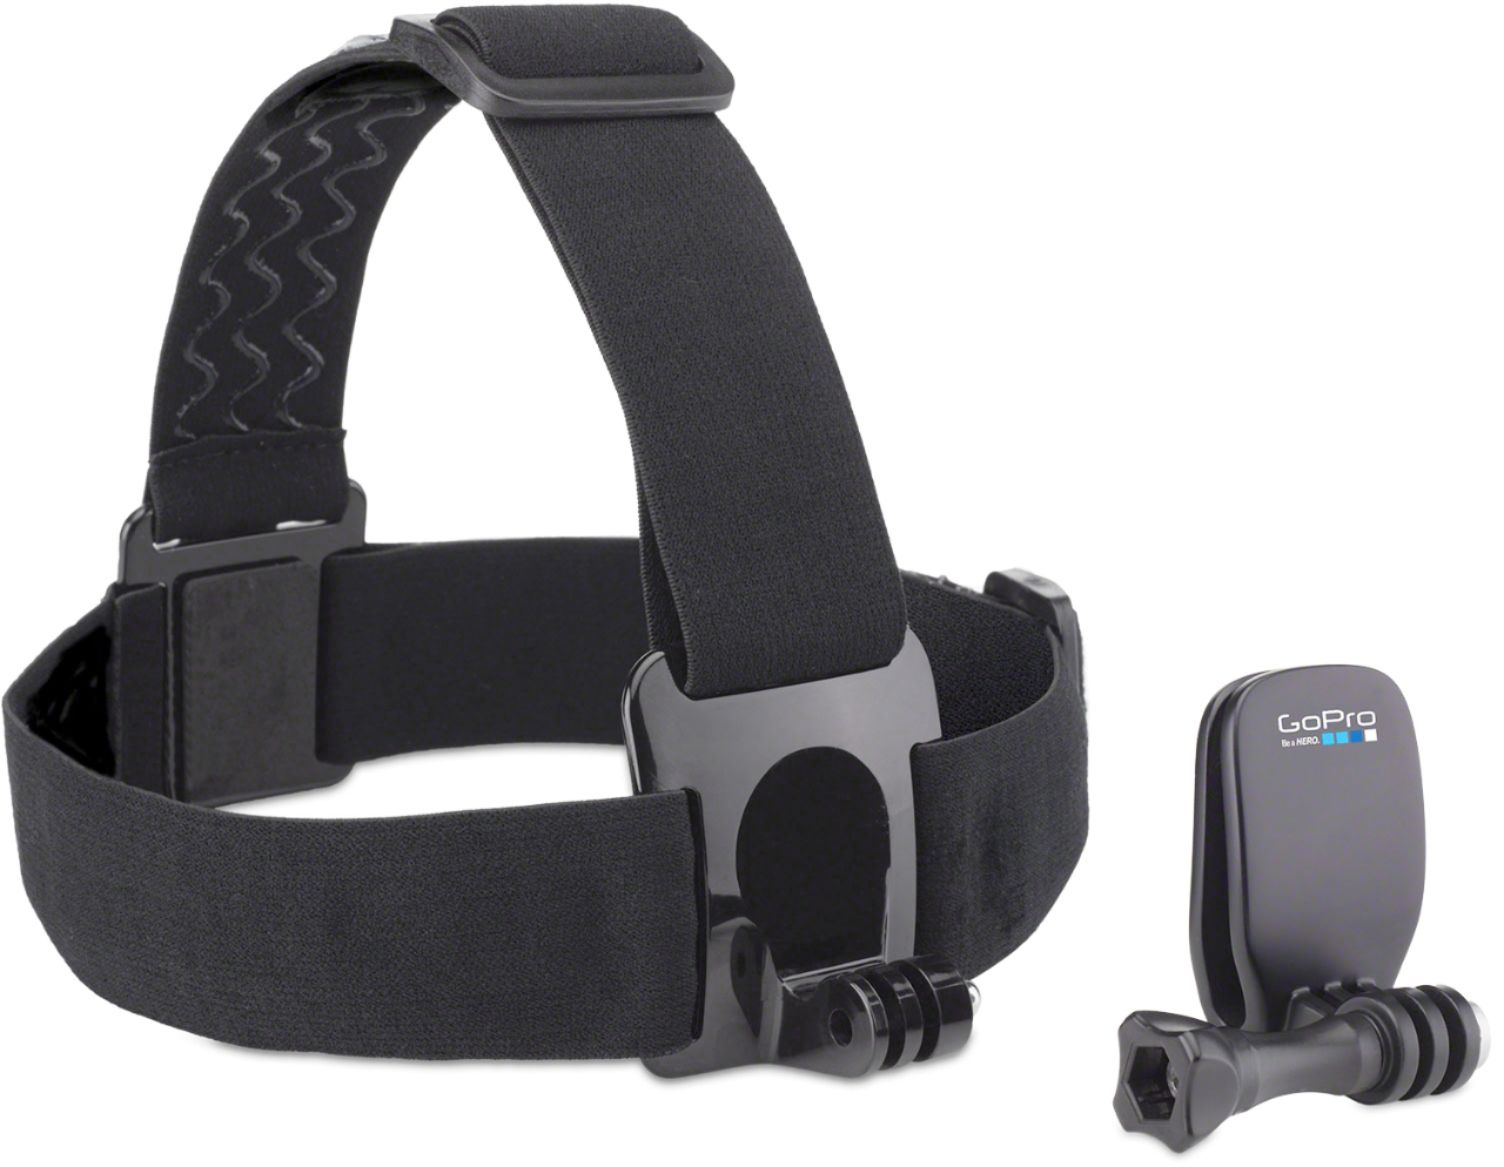 Head Strap + Camera Head for All GoPro Black ACHOM-001 - Best Buy